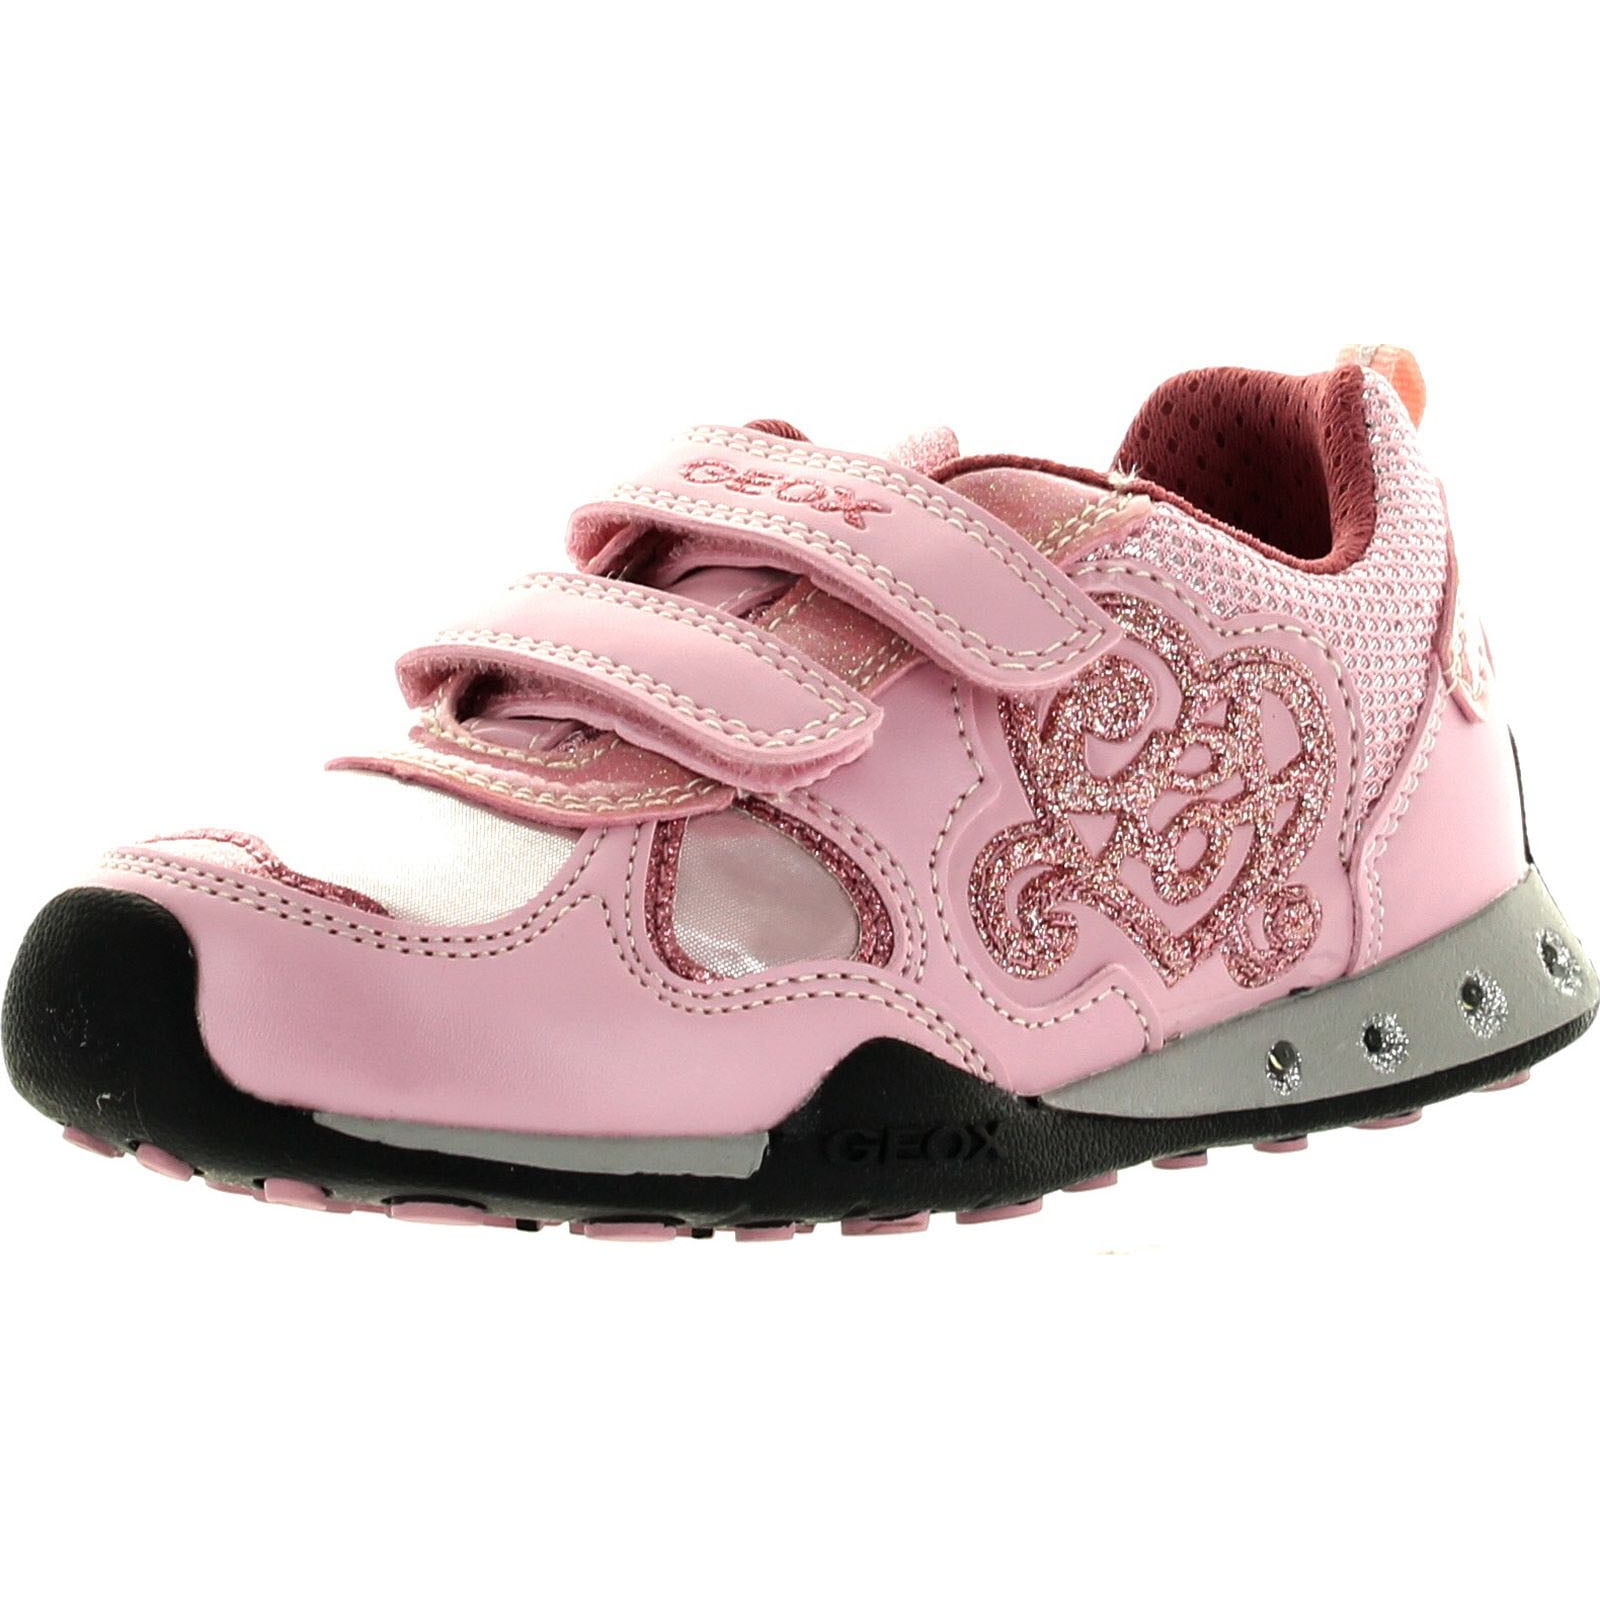 Aanwezigheid Chaise longue Verwaarlozing Geox JR New Jocker Girls Lighted Fashion Sneaker, Pink, 34 - Walmart.com